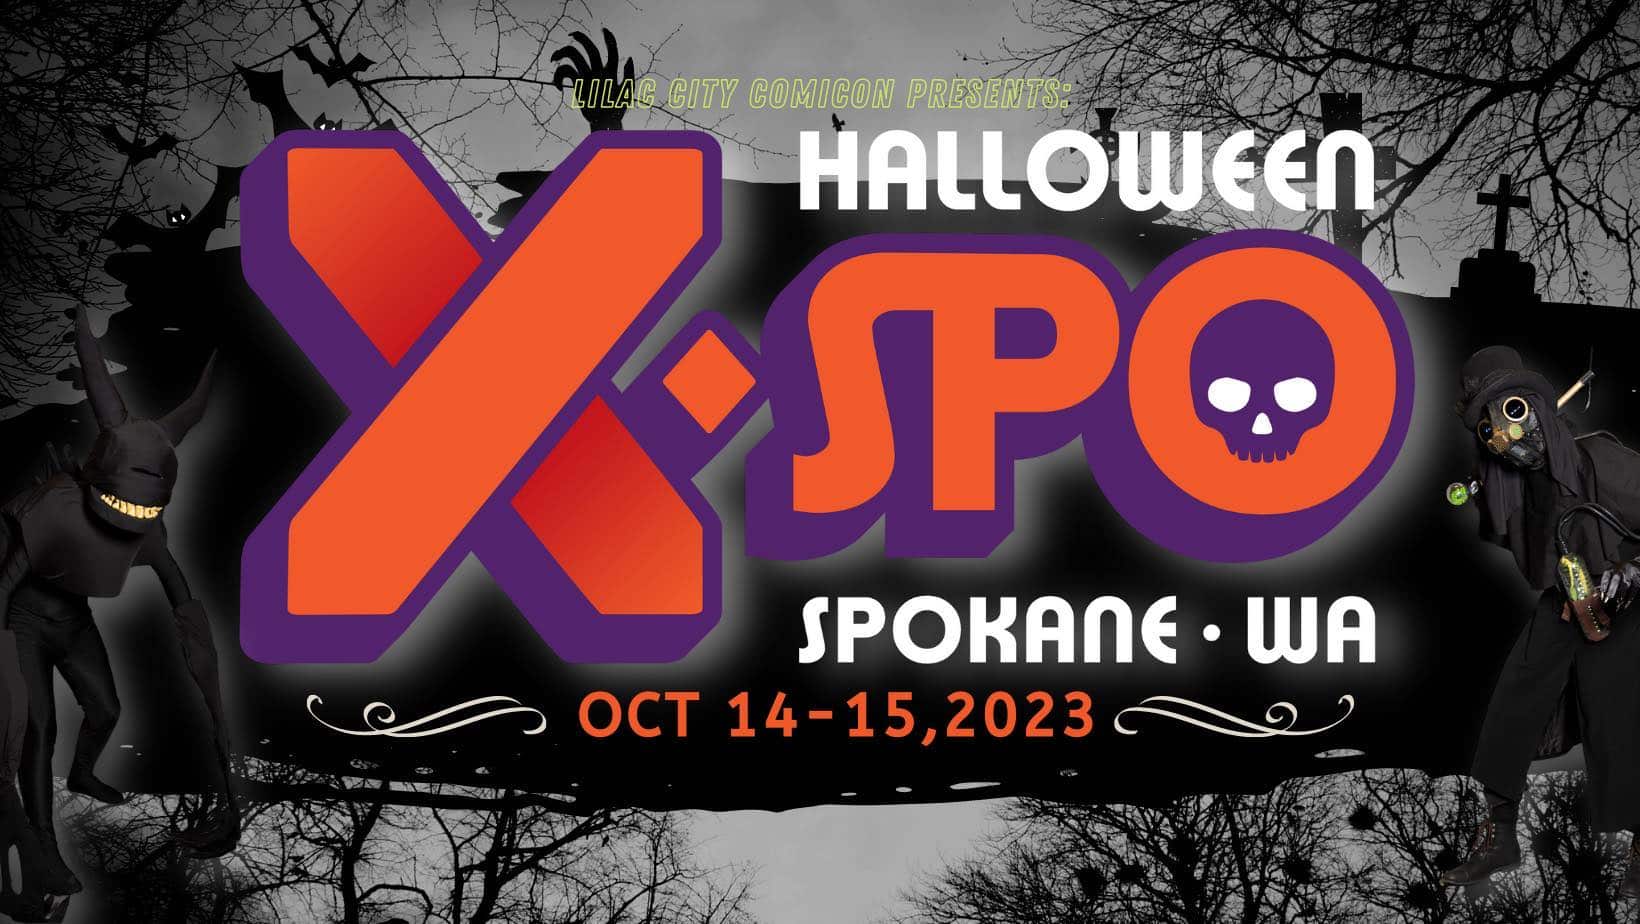 Halloween X-Spo Spokane Washington Banner